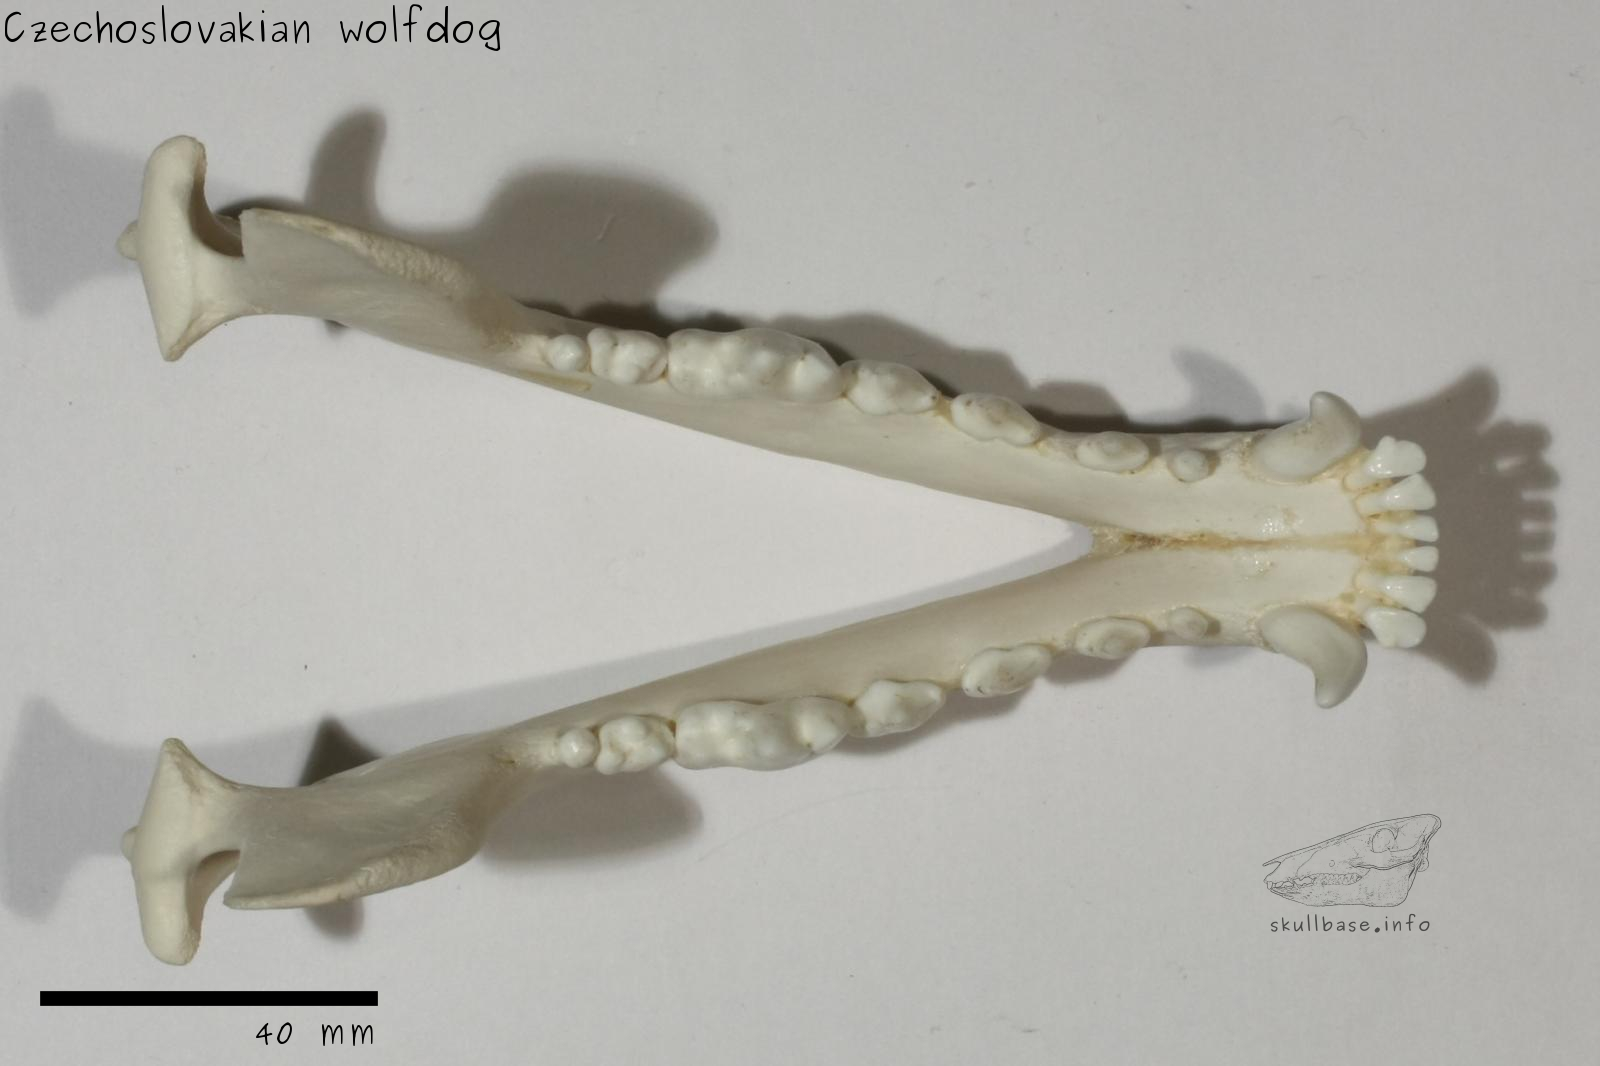 Czechoslovakian wolfdog (Canis lupus familiaris) jaw